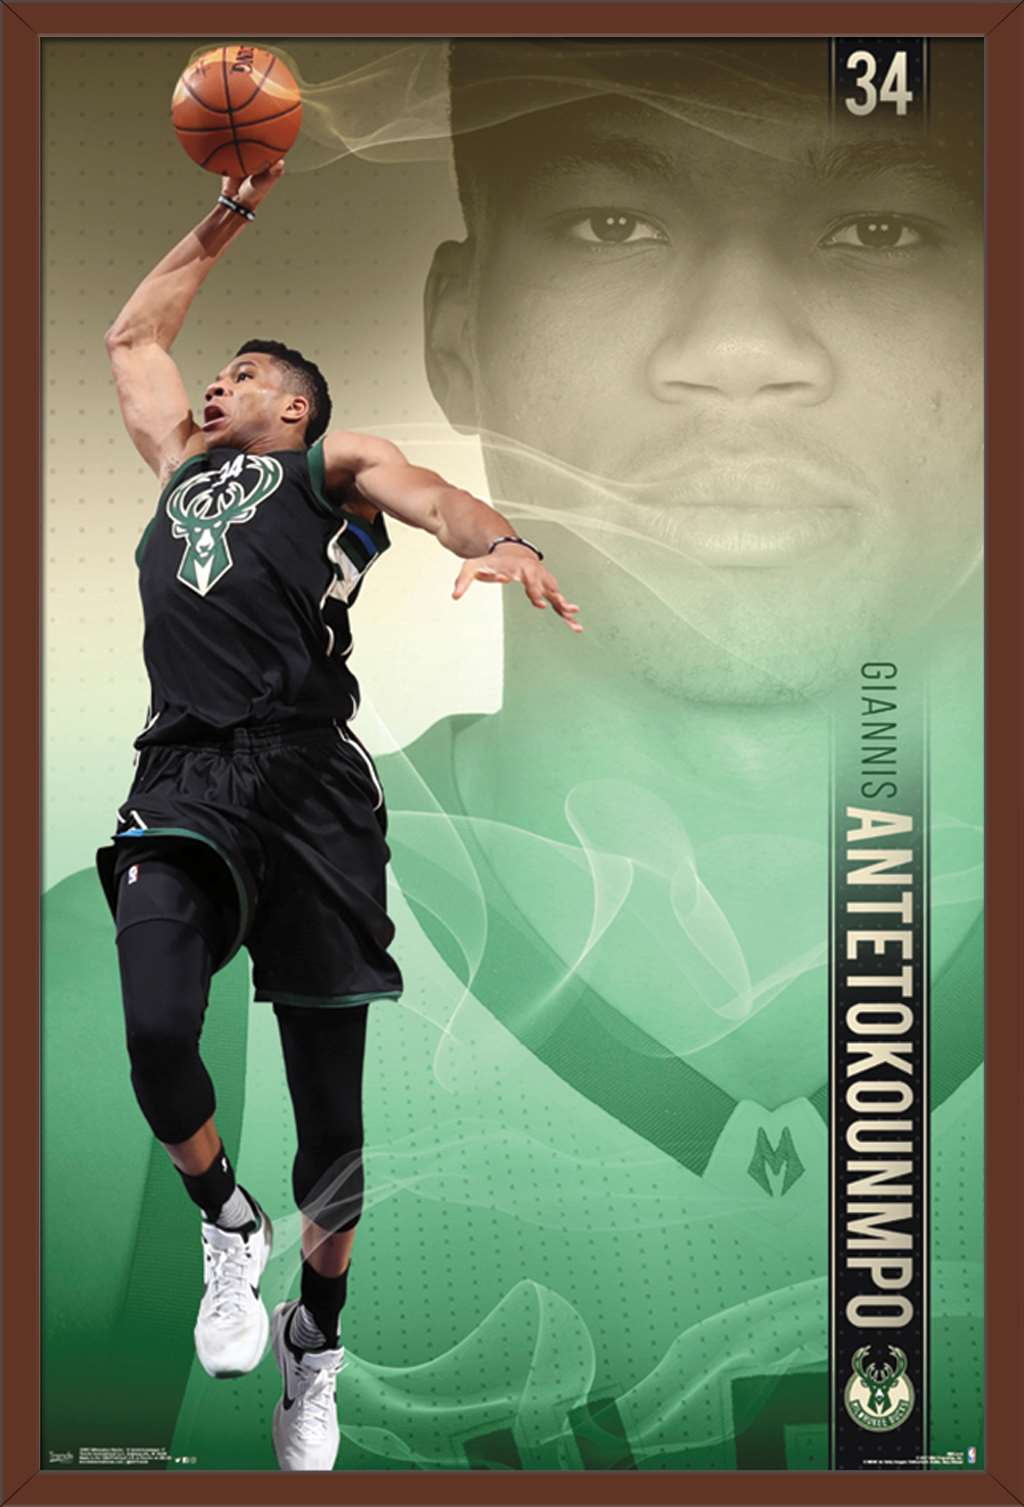 NBA Chicago Bulls - Lonzo Ball 22 Wall Poster, 22.375 x 34 